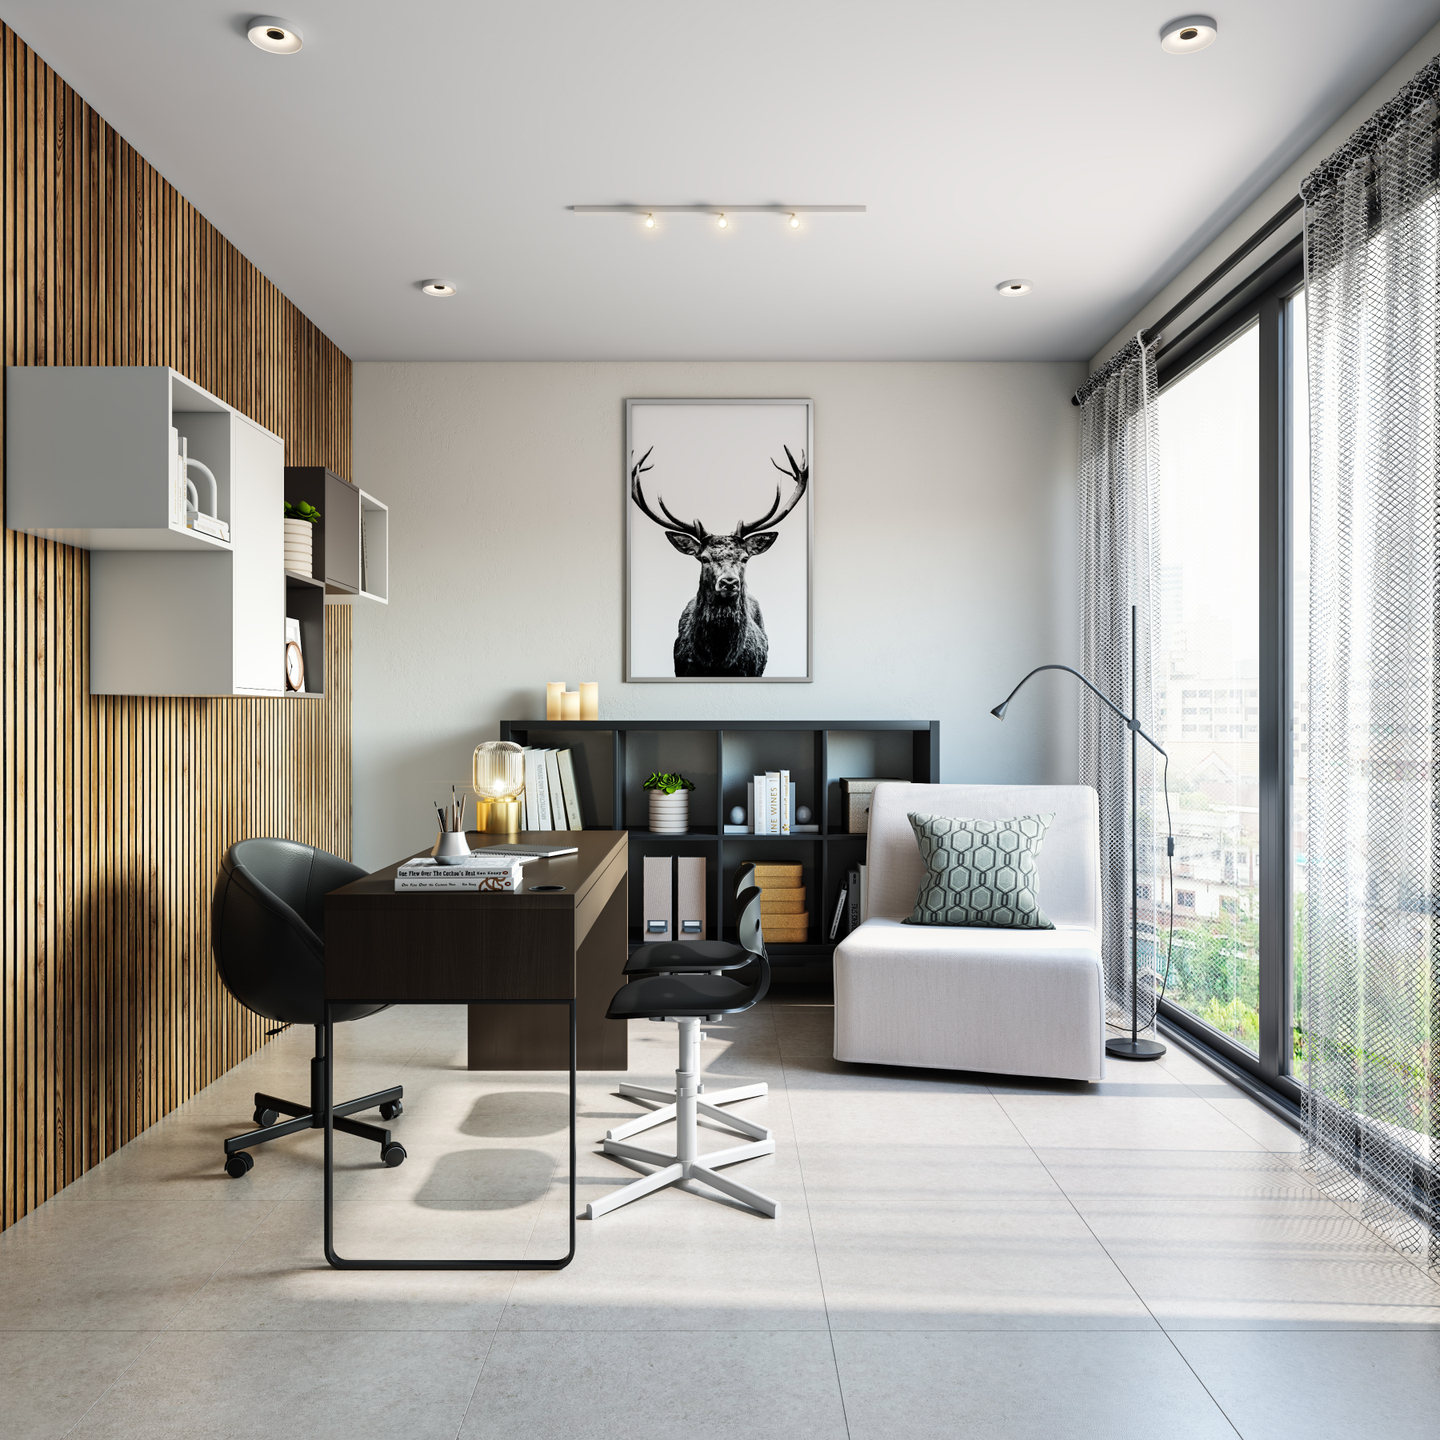 Rustic Home Office Design Idea - Livspace